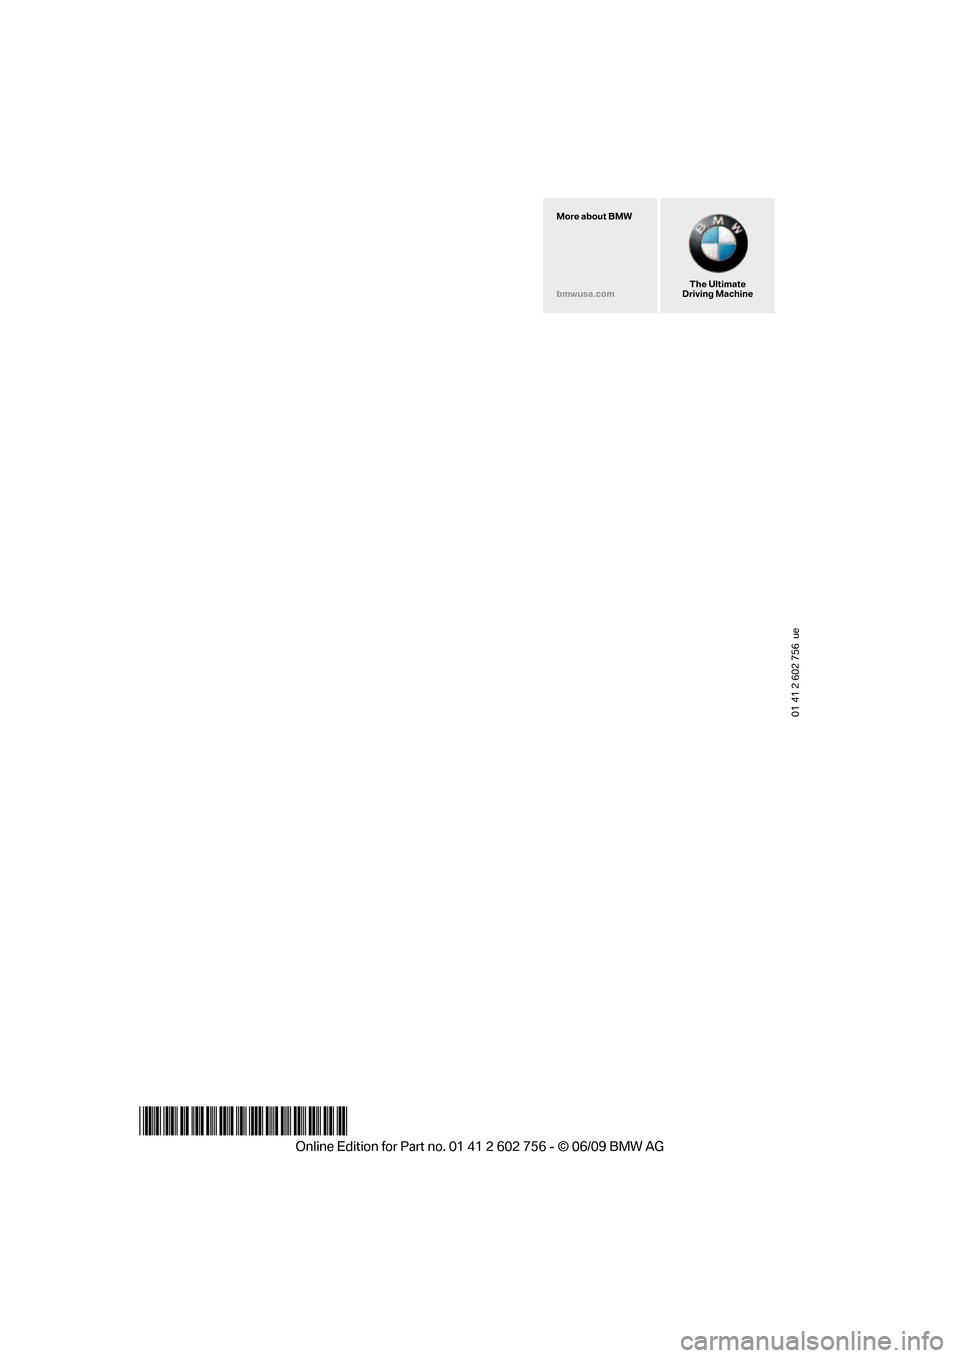 BMW X5 XDRIVE 30I 2010 E70 Owners Manual 01 41 2 602 756  ue
*BL2602756004*
The Ultimate
Driving Machine More about BMW
bmwusa.com
ba8_e70ag.book  Seite 298  Freitag, 5. Juni 2009  11:42 11 